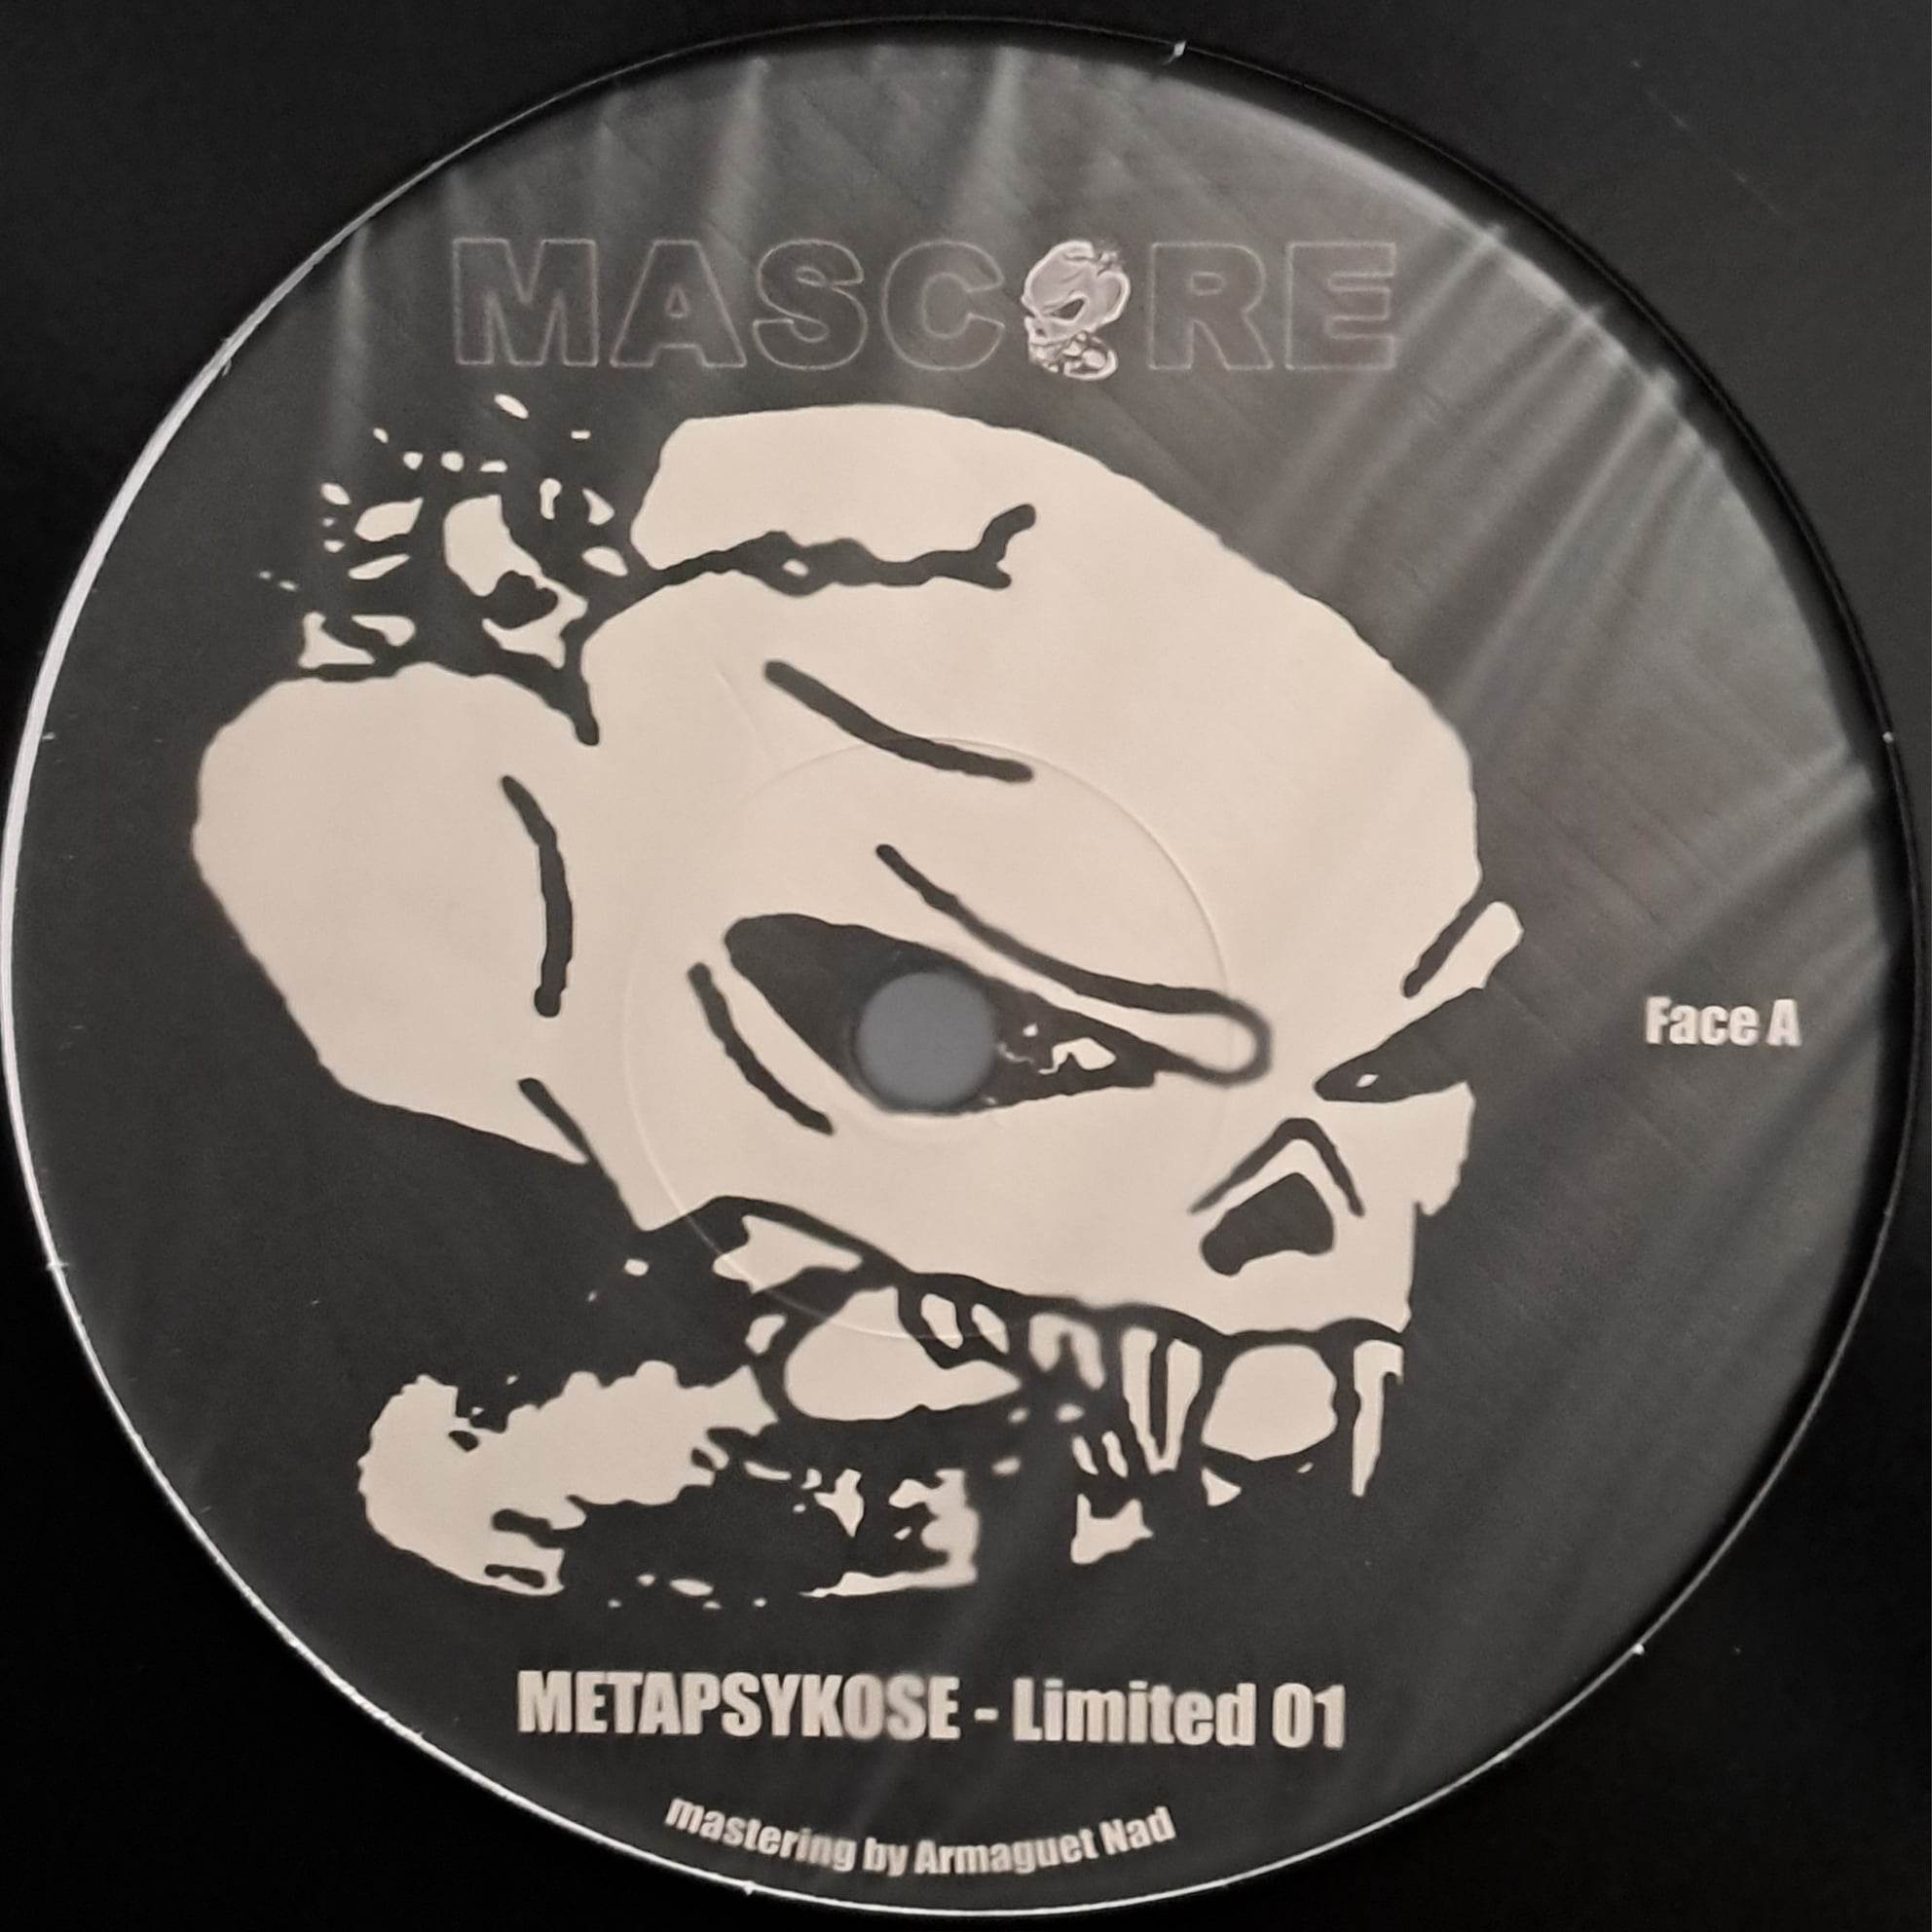 Metapsykose Limited 01 - vinyle hardcore